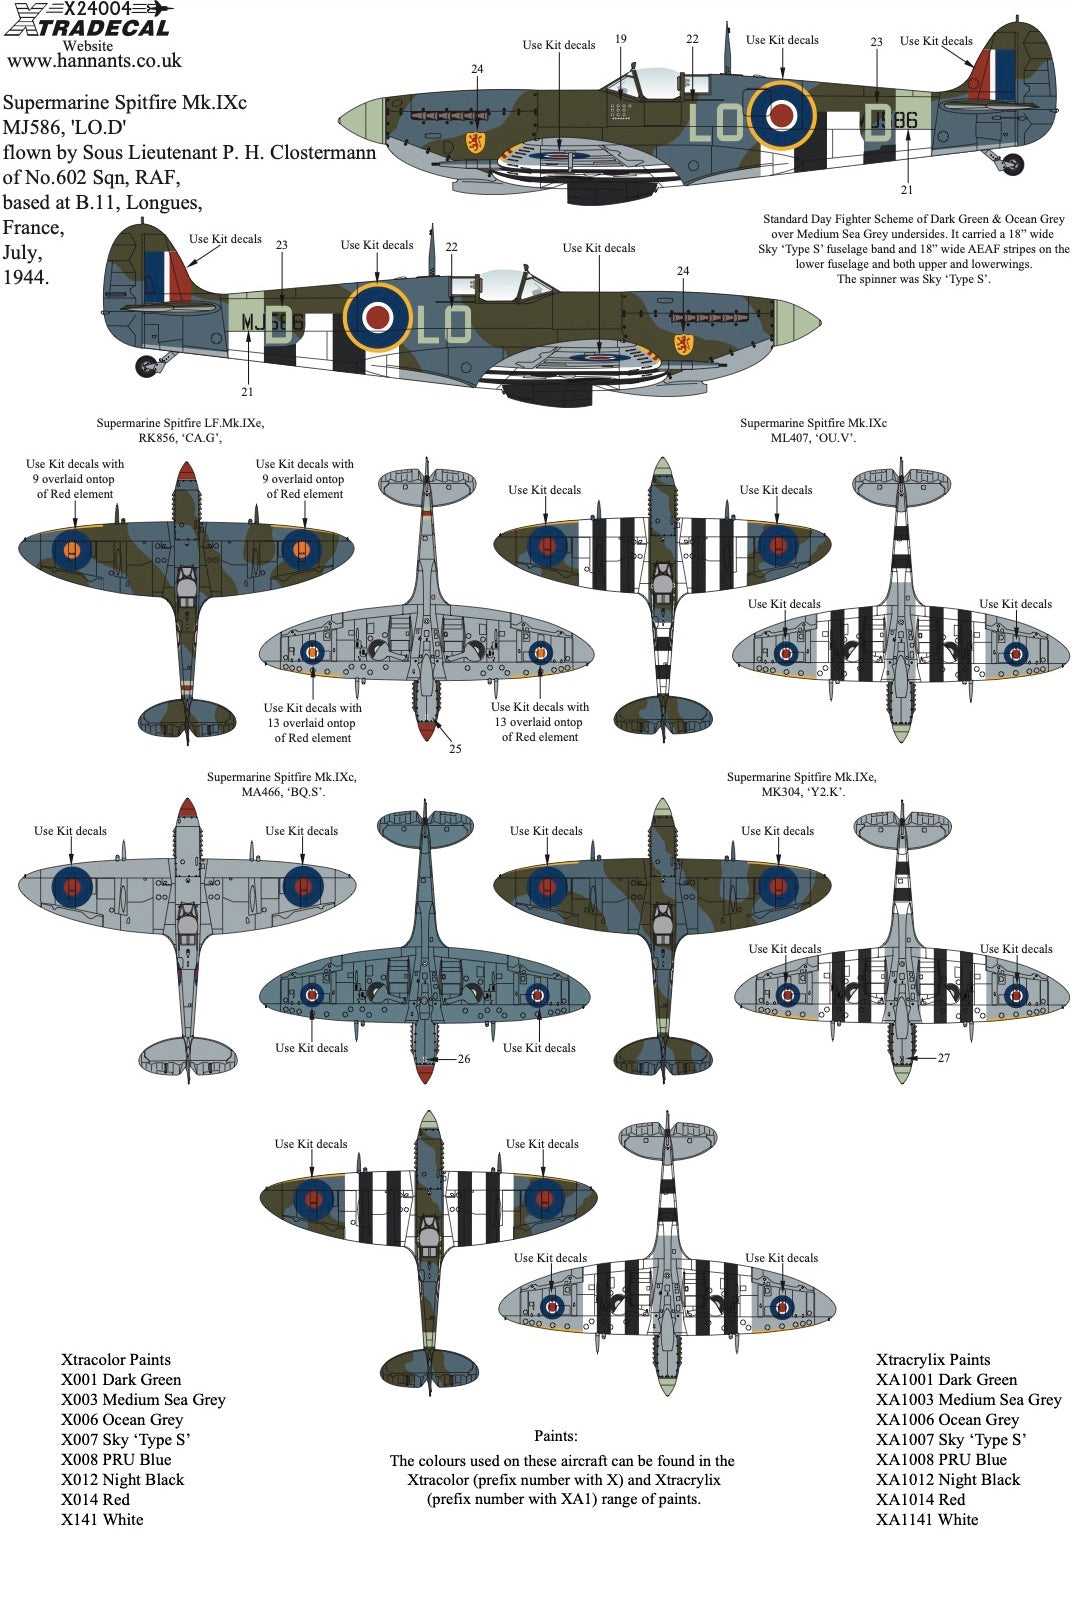 Xtradecal X24004 Supermarine Spitfire Mk.IX Collection Part 1 1/24